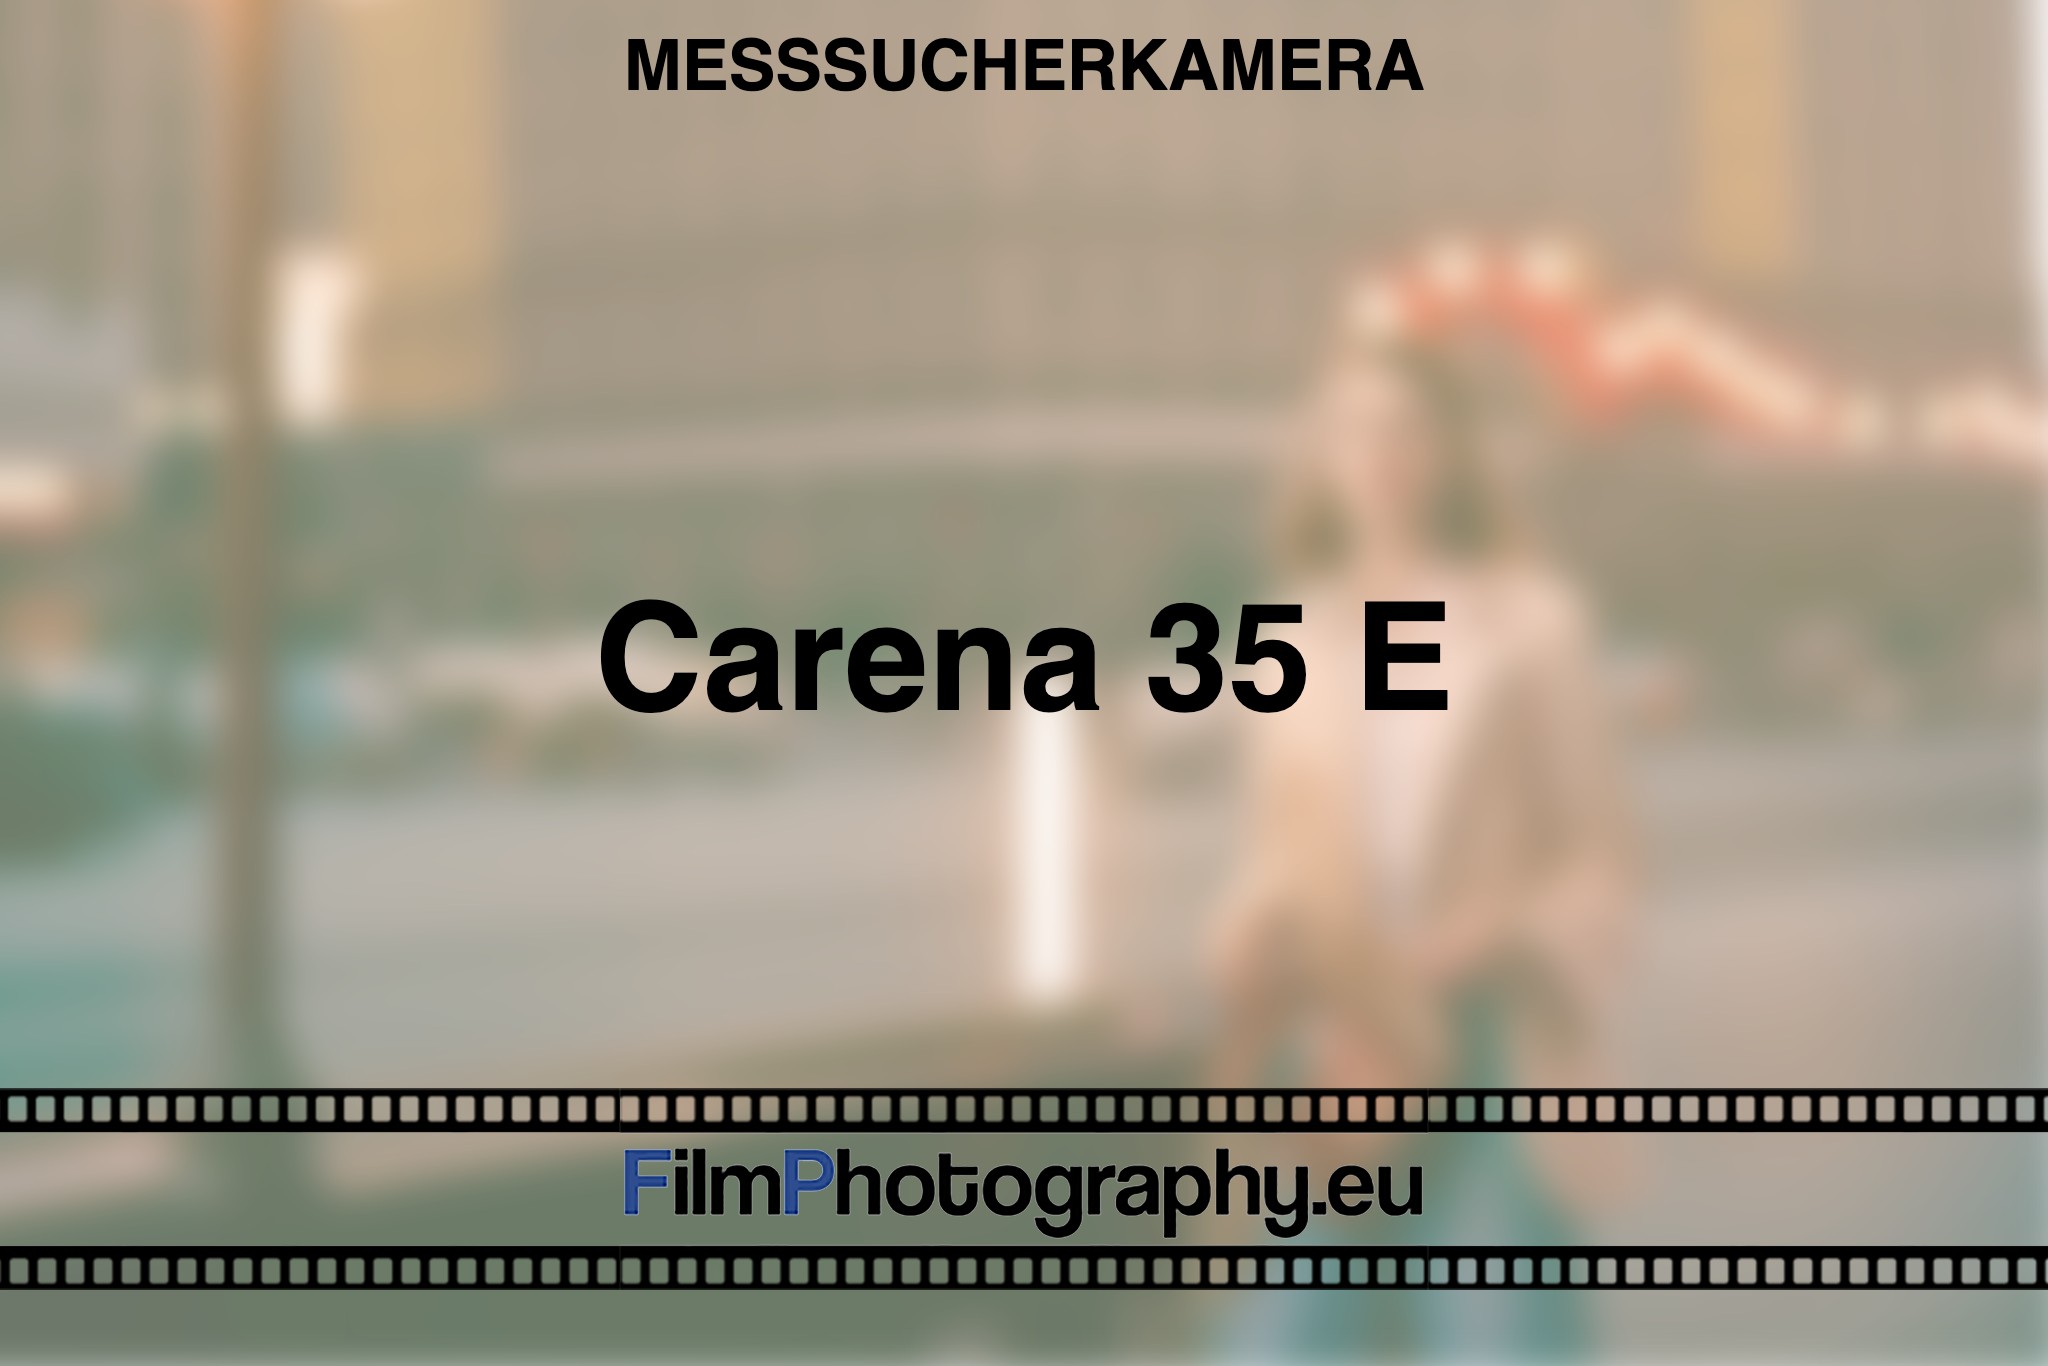 carena-35-e-messsucherkamera-bnv